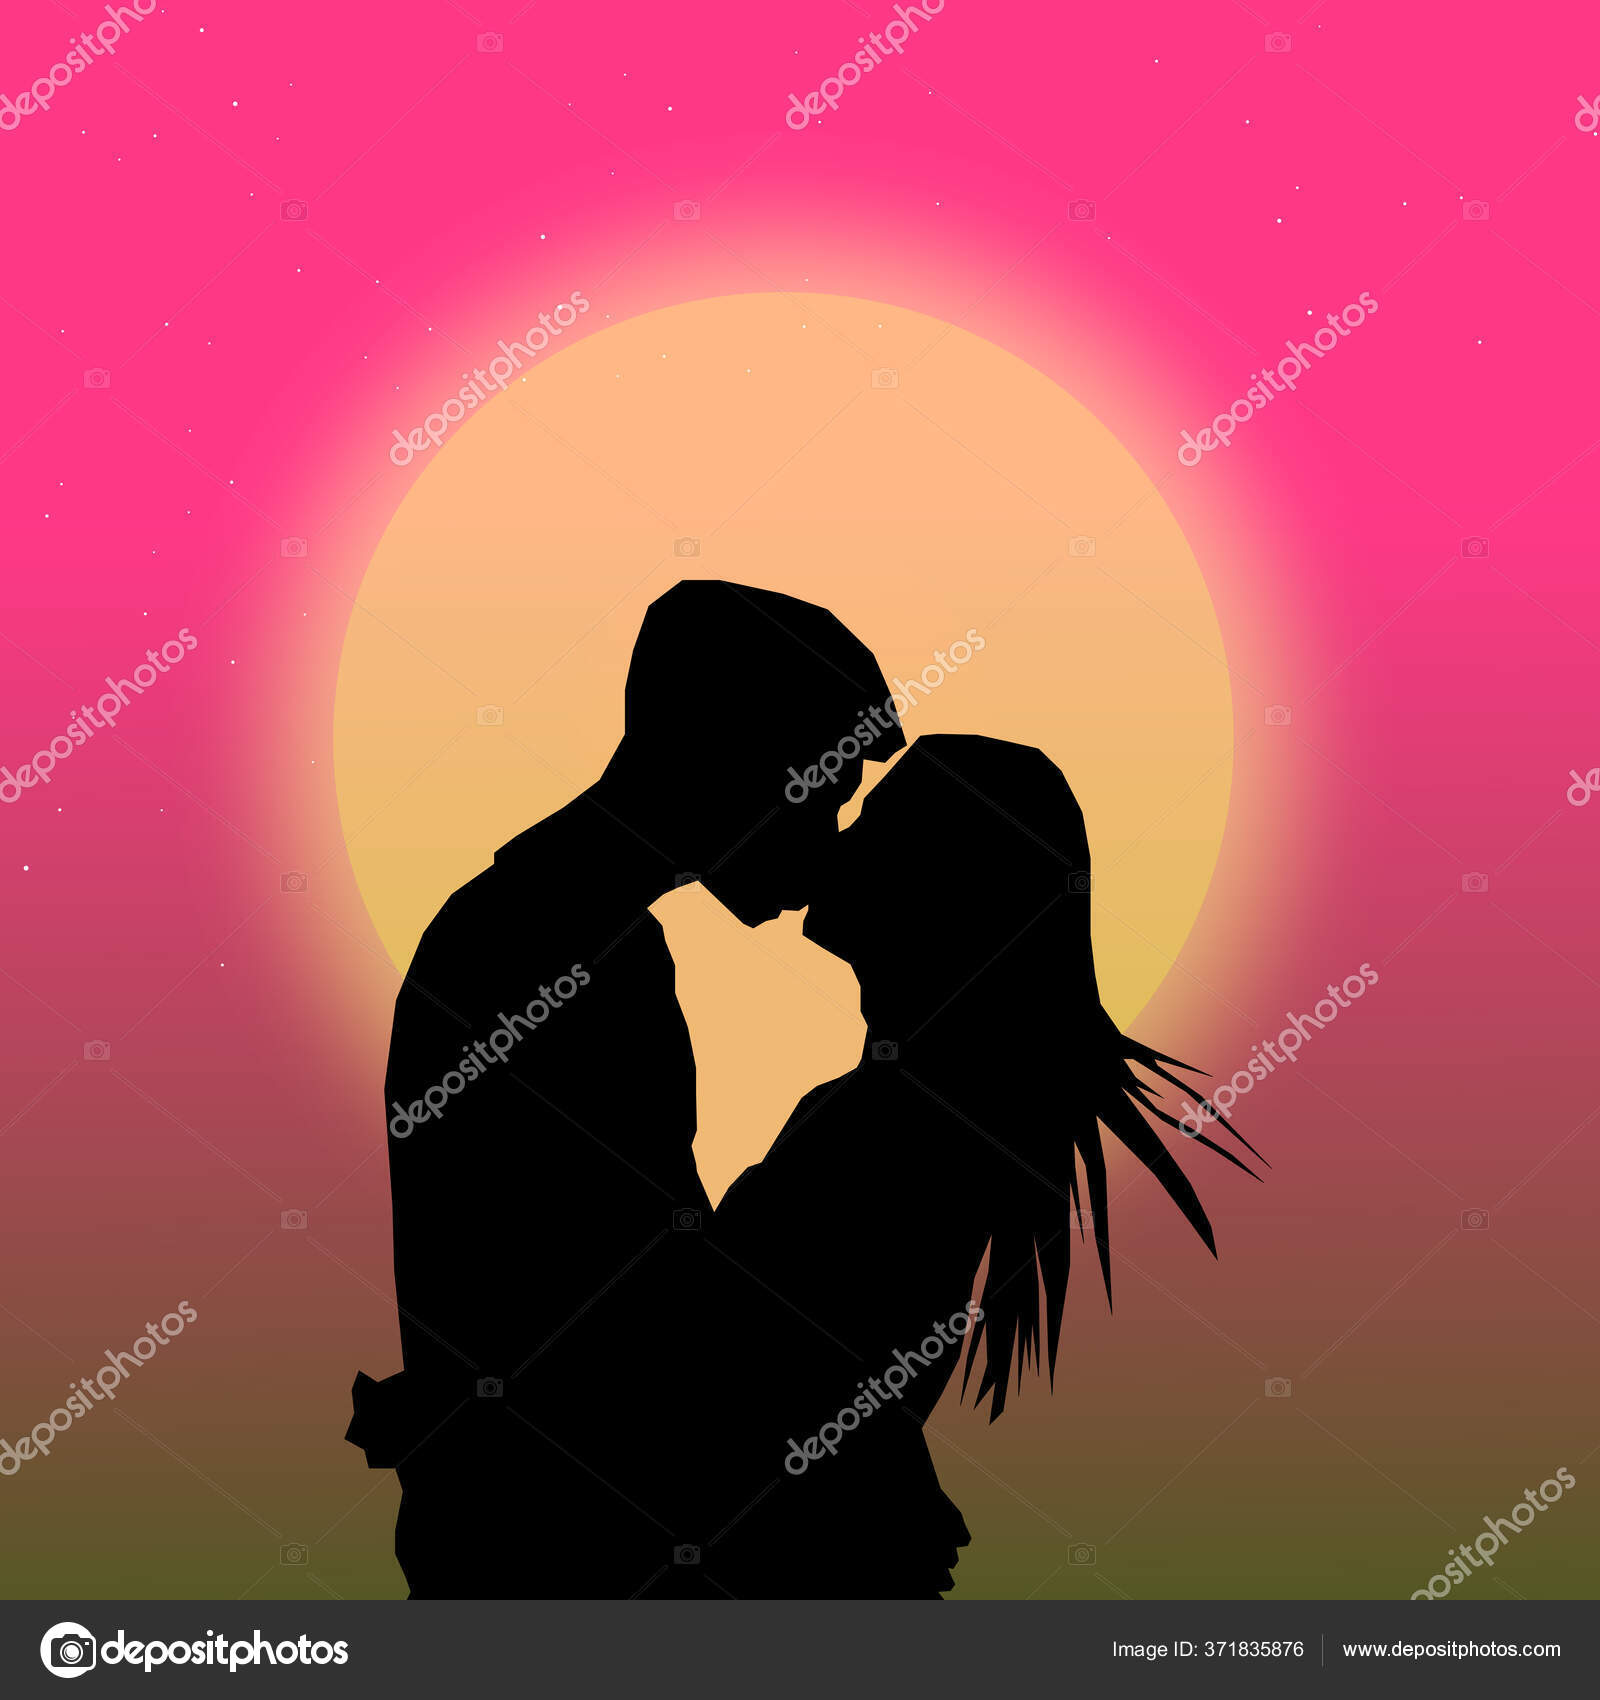 https://st3.depositphotos.com/2082401/37183/i/1600/depositphotos_371835876-stock-photo-love-declaration-love-couple-kissing.jpg